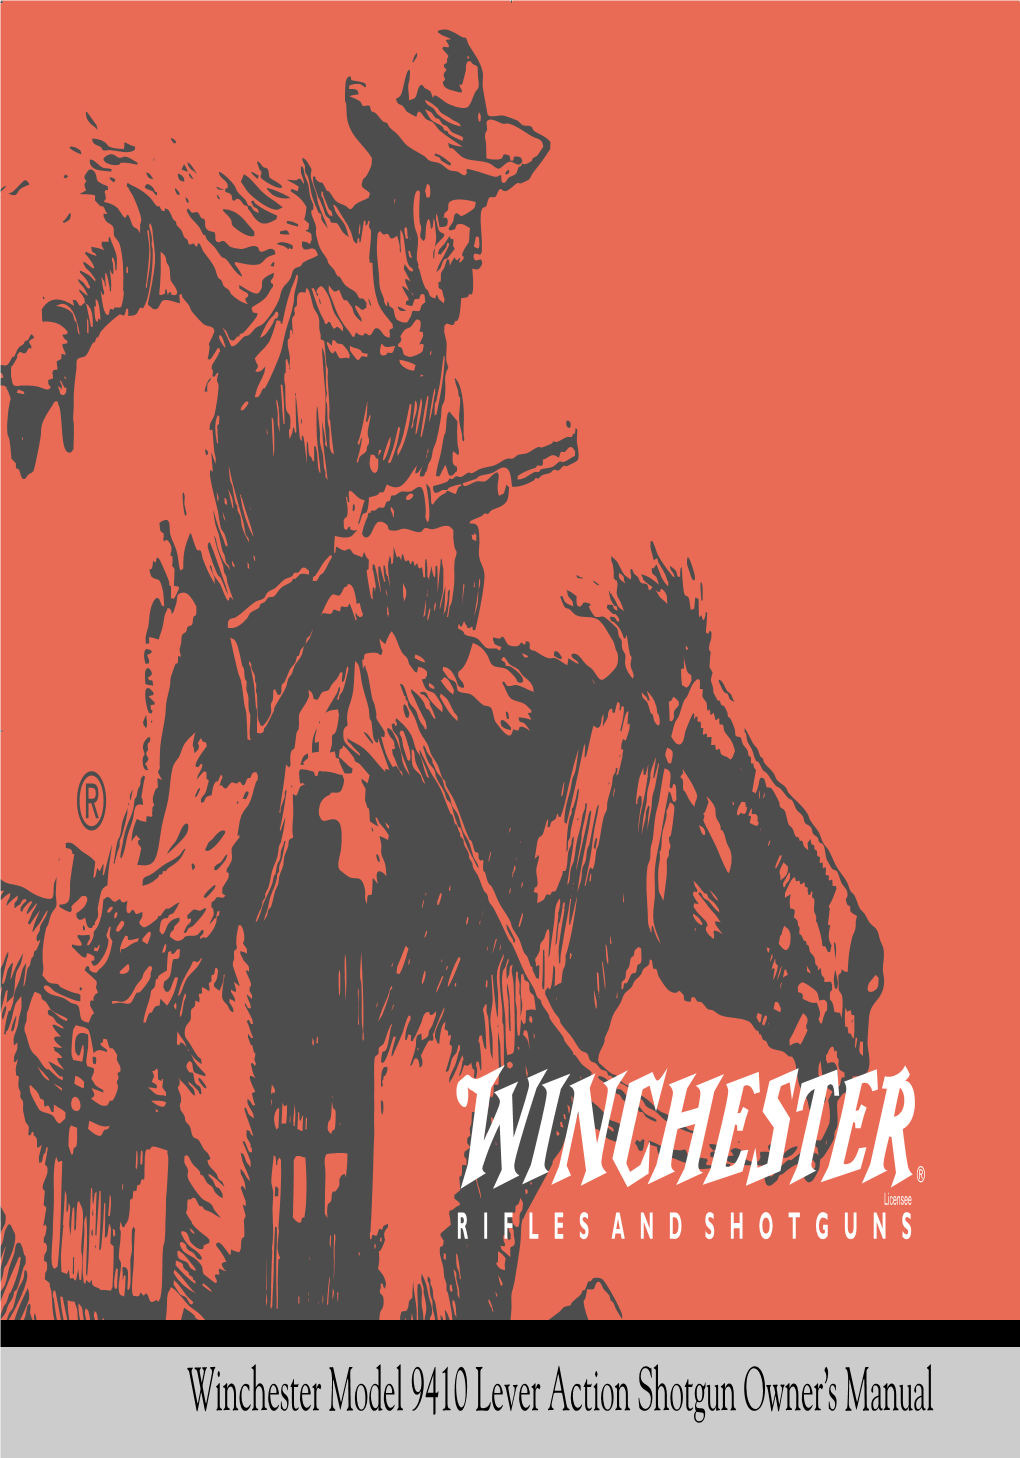 Winchester Model 9410 Lever Action Shotgun Owner's Manual